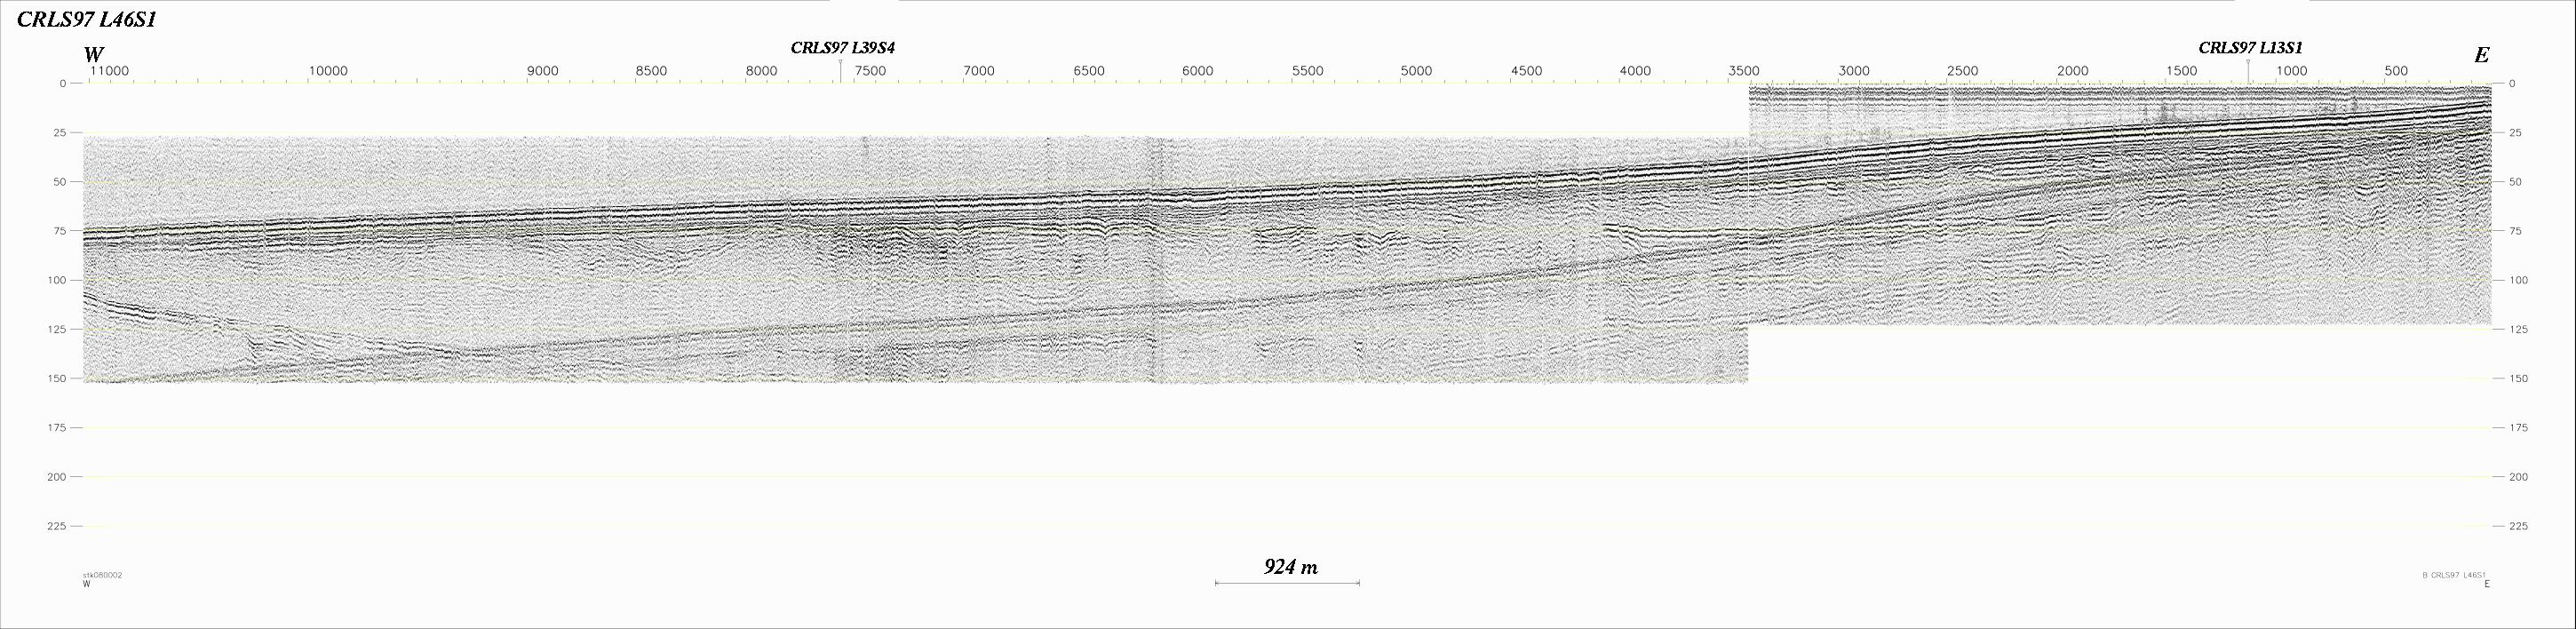 Seismic Reflection Profile Line No.: L46s1 (365690 bytes)